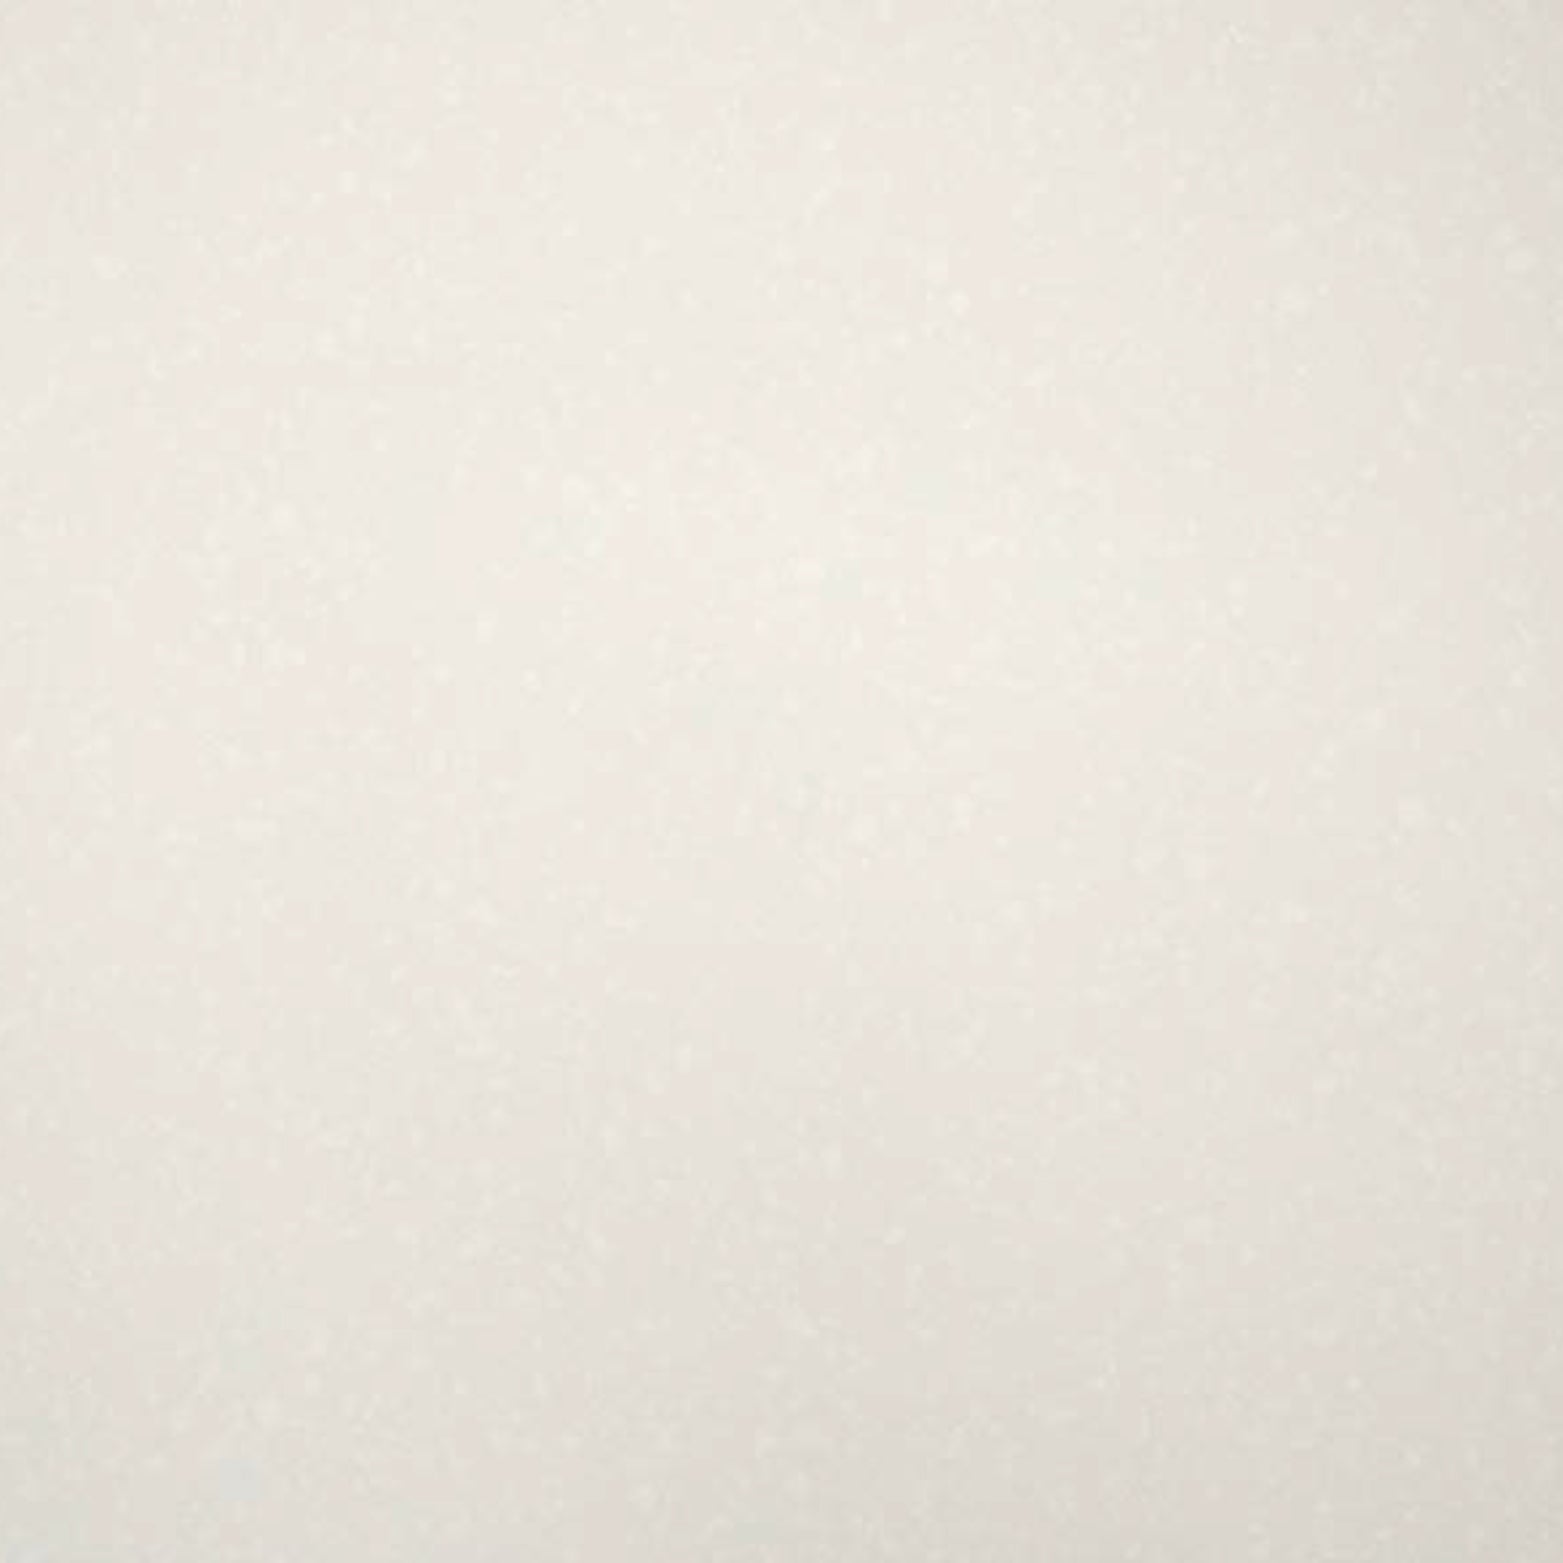 TIMBERLINE WHITE CRYSTAL BOULDER SILKSURFACE TOP PAPER SAMPLE